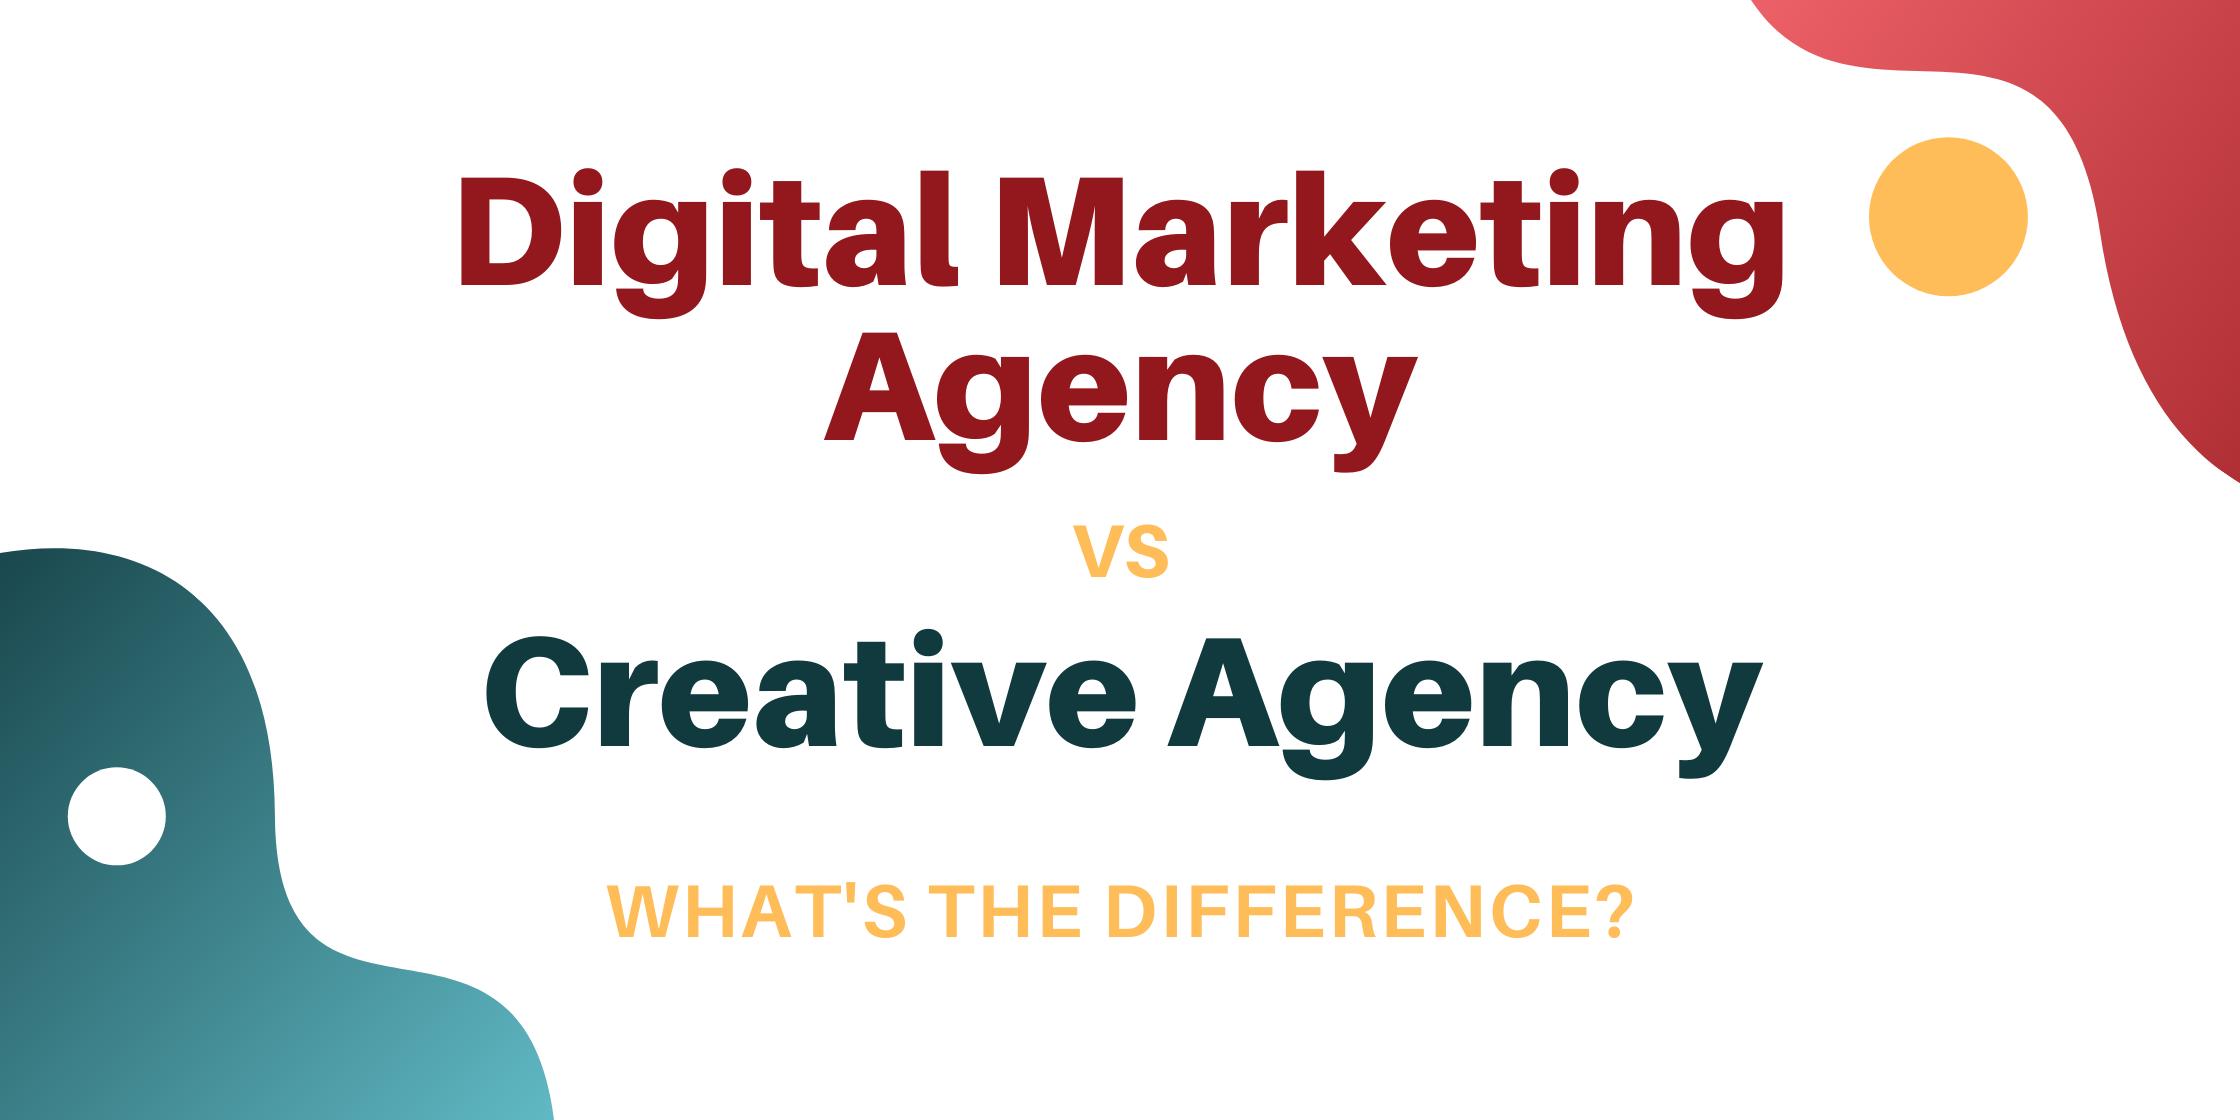 Digital Marketing Agency VS Creative Agency